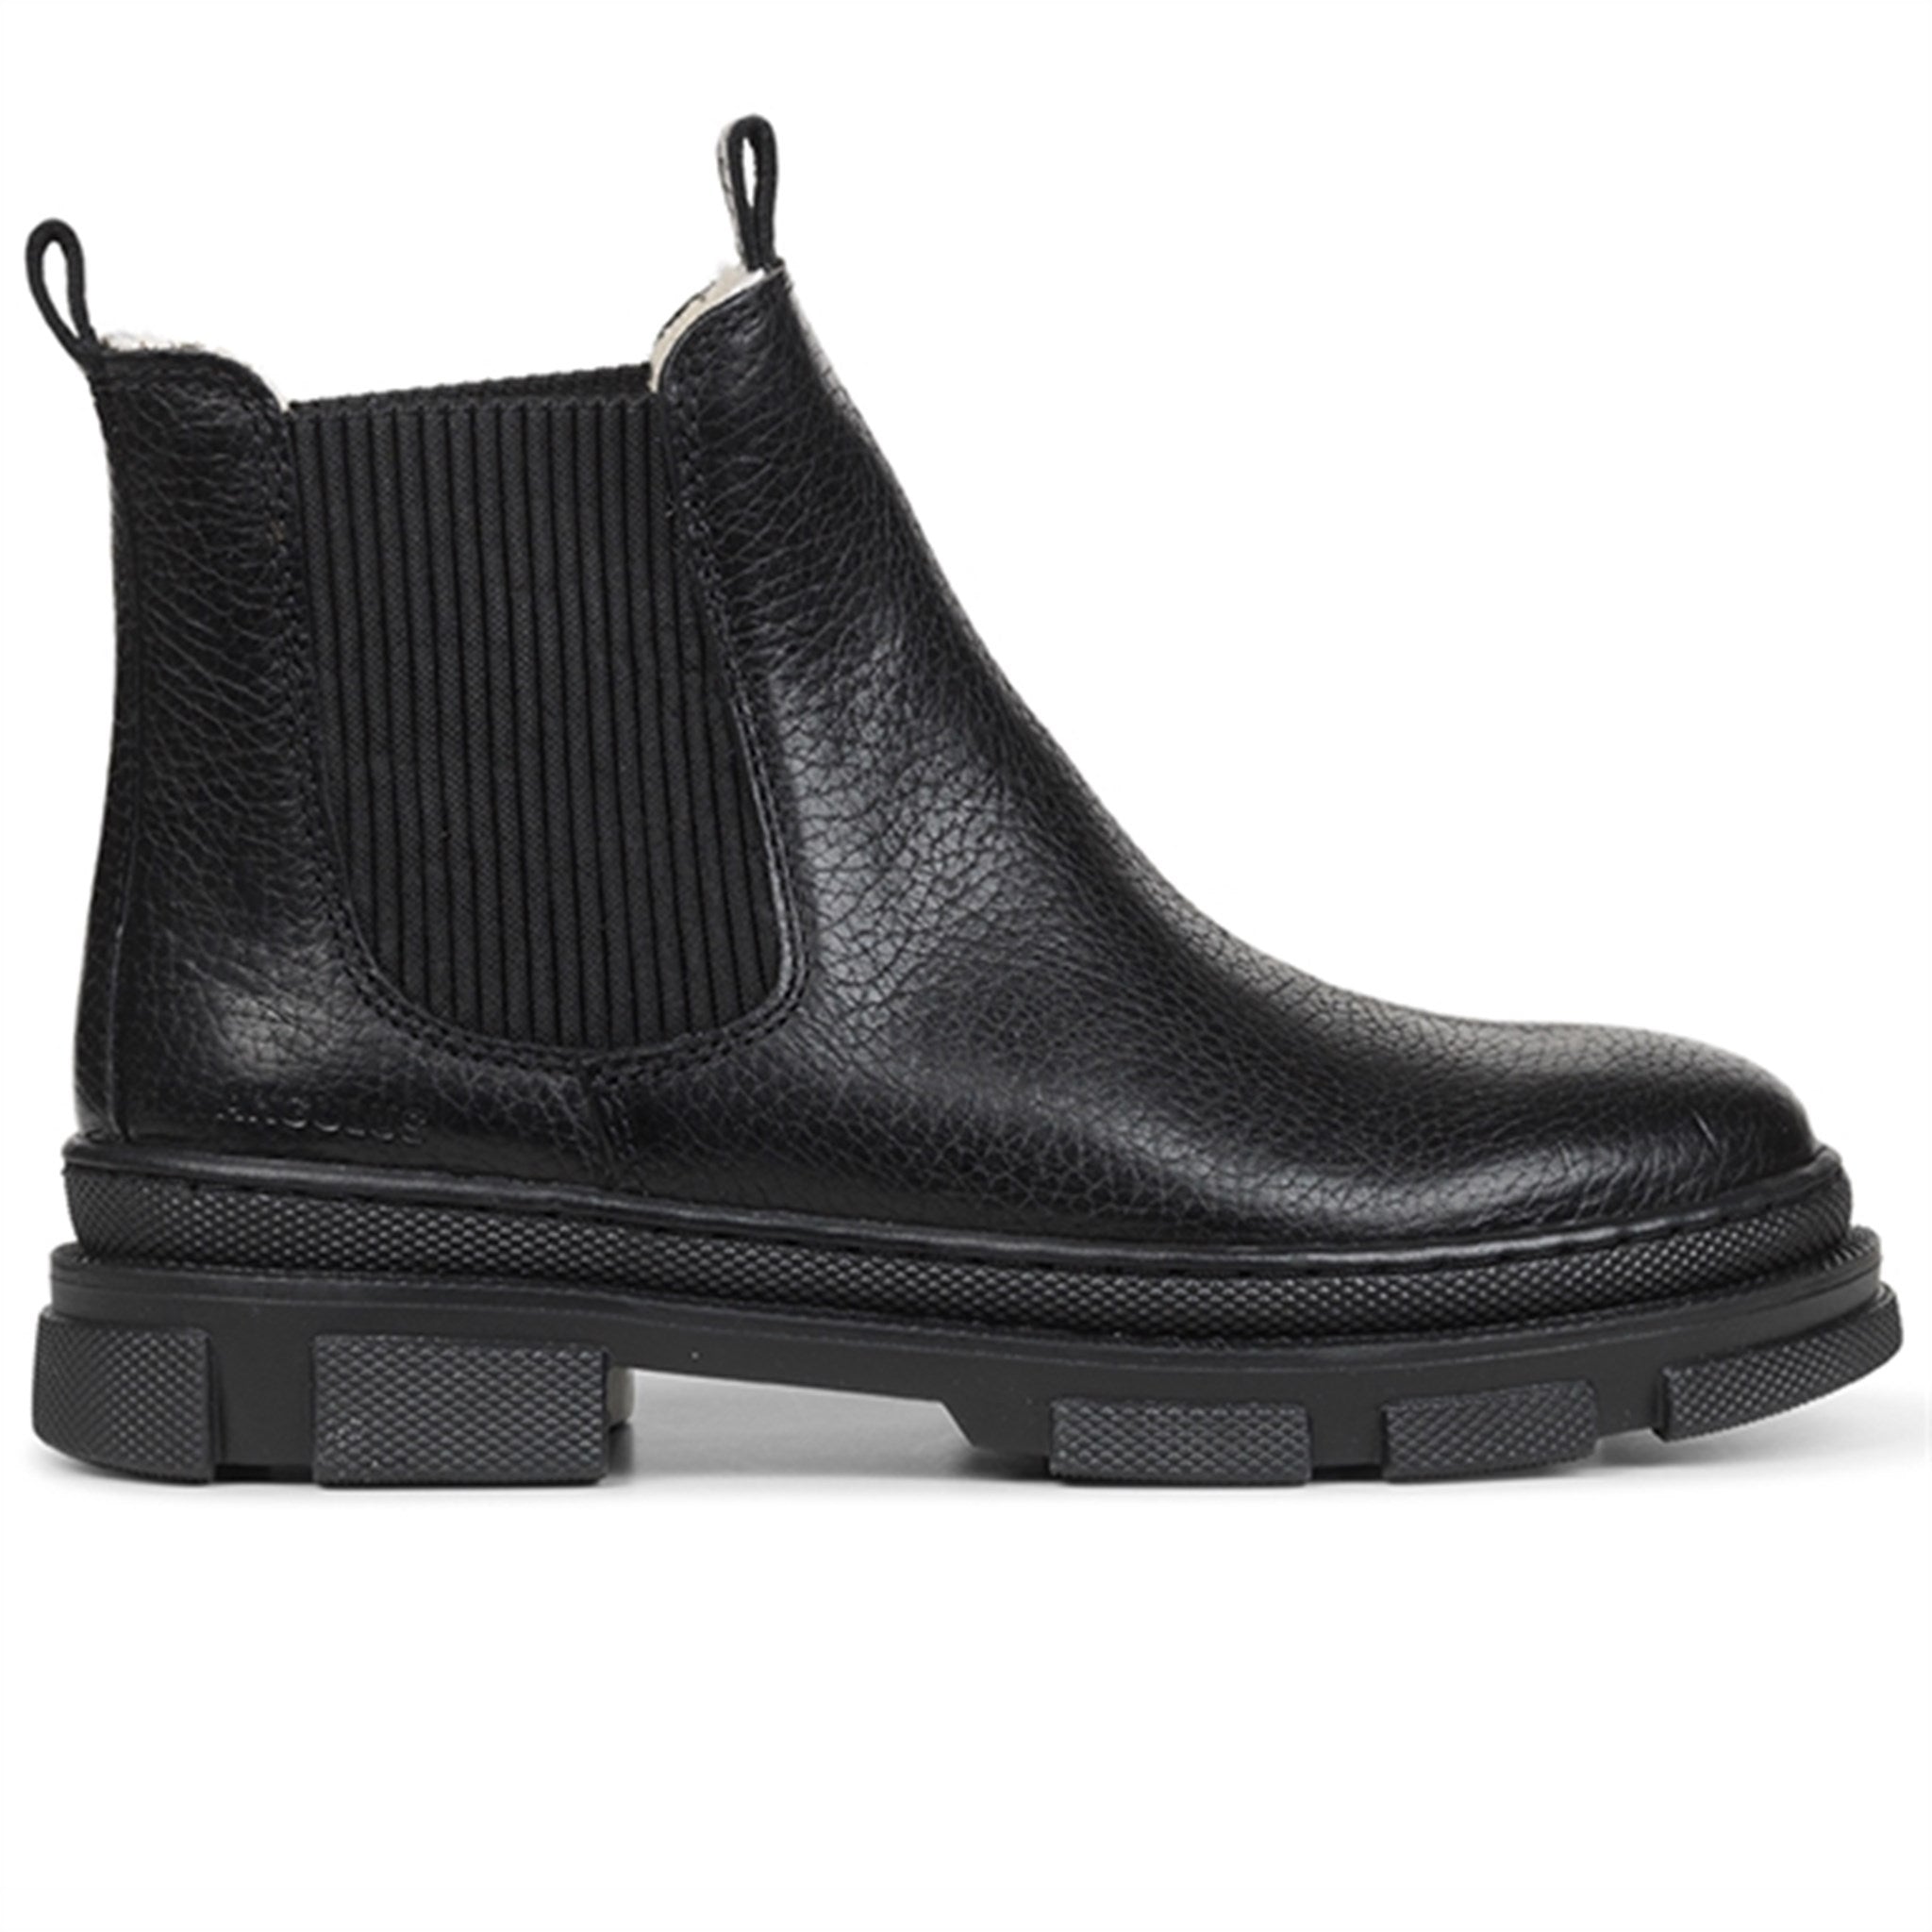 Angulus Boots w Elastic and Wool Lining Black/Black 4